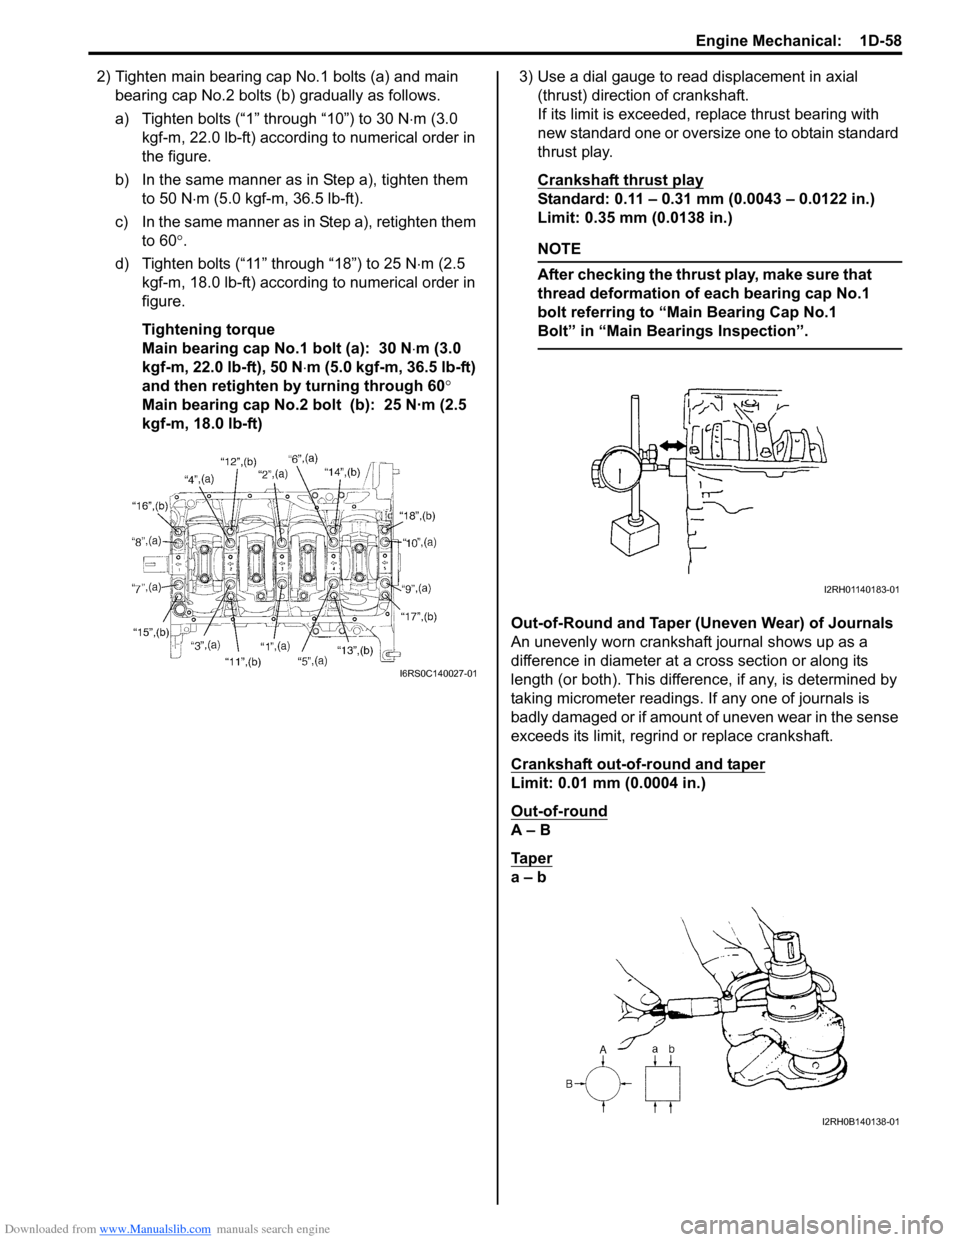 SUZUKI SWIFT 2007 2.G Service Workshop Manual Downloaded from www.Manualslib.com manuals search engine Engine Mechanical:  1D-58
2) Tighten main bearing cap No.1 bolts (a) and main bearing cap No.2 bolts (b ) gradually as follows.
a) Tighten bolt